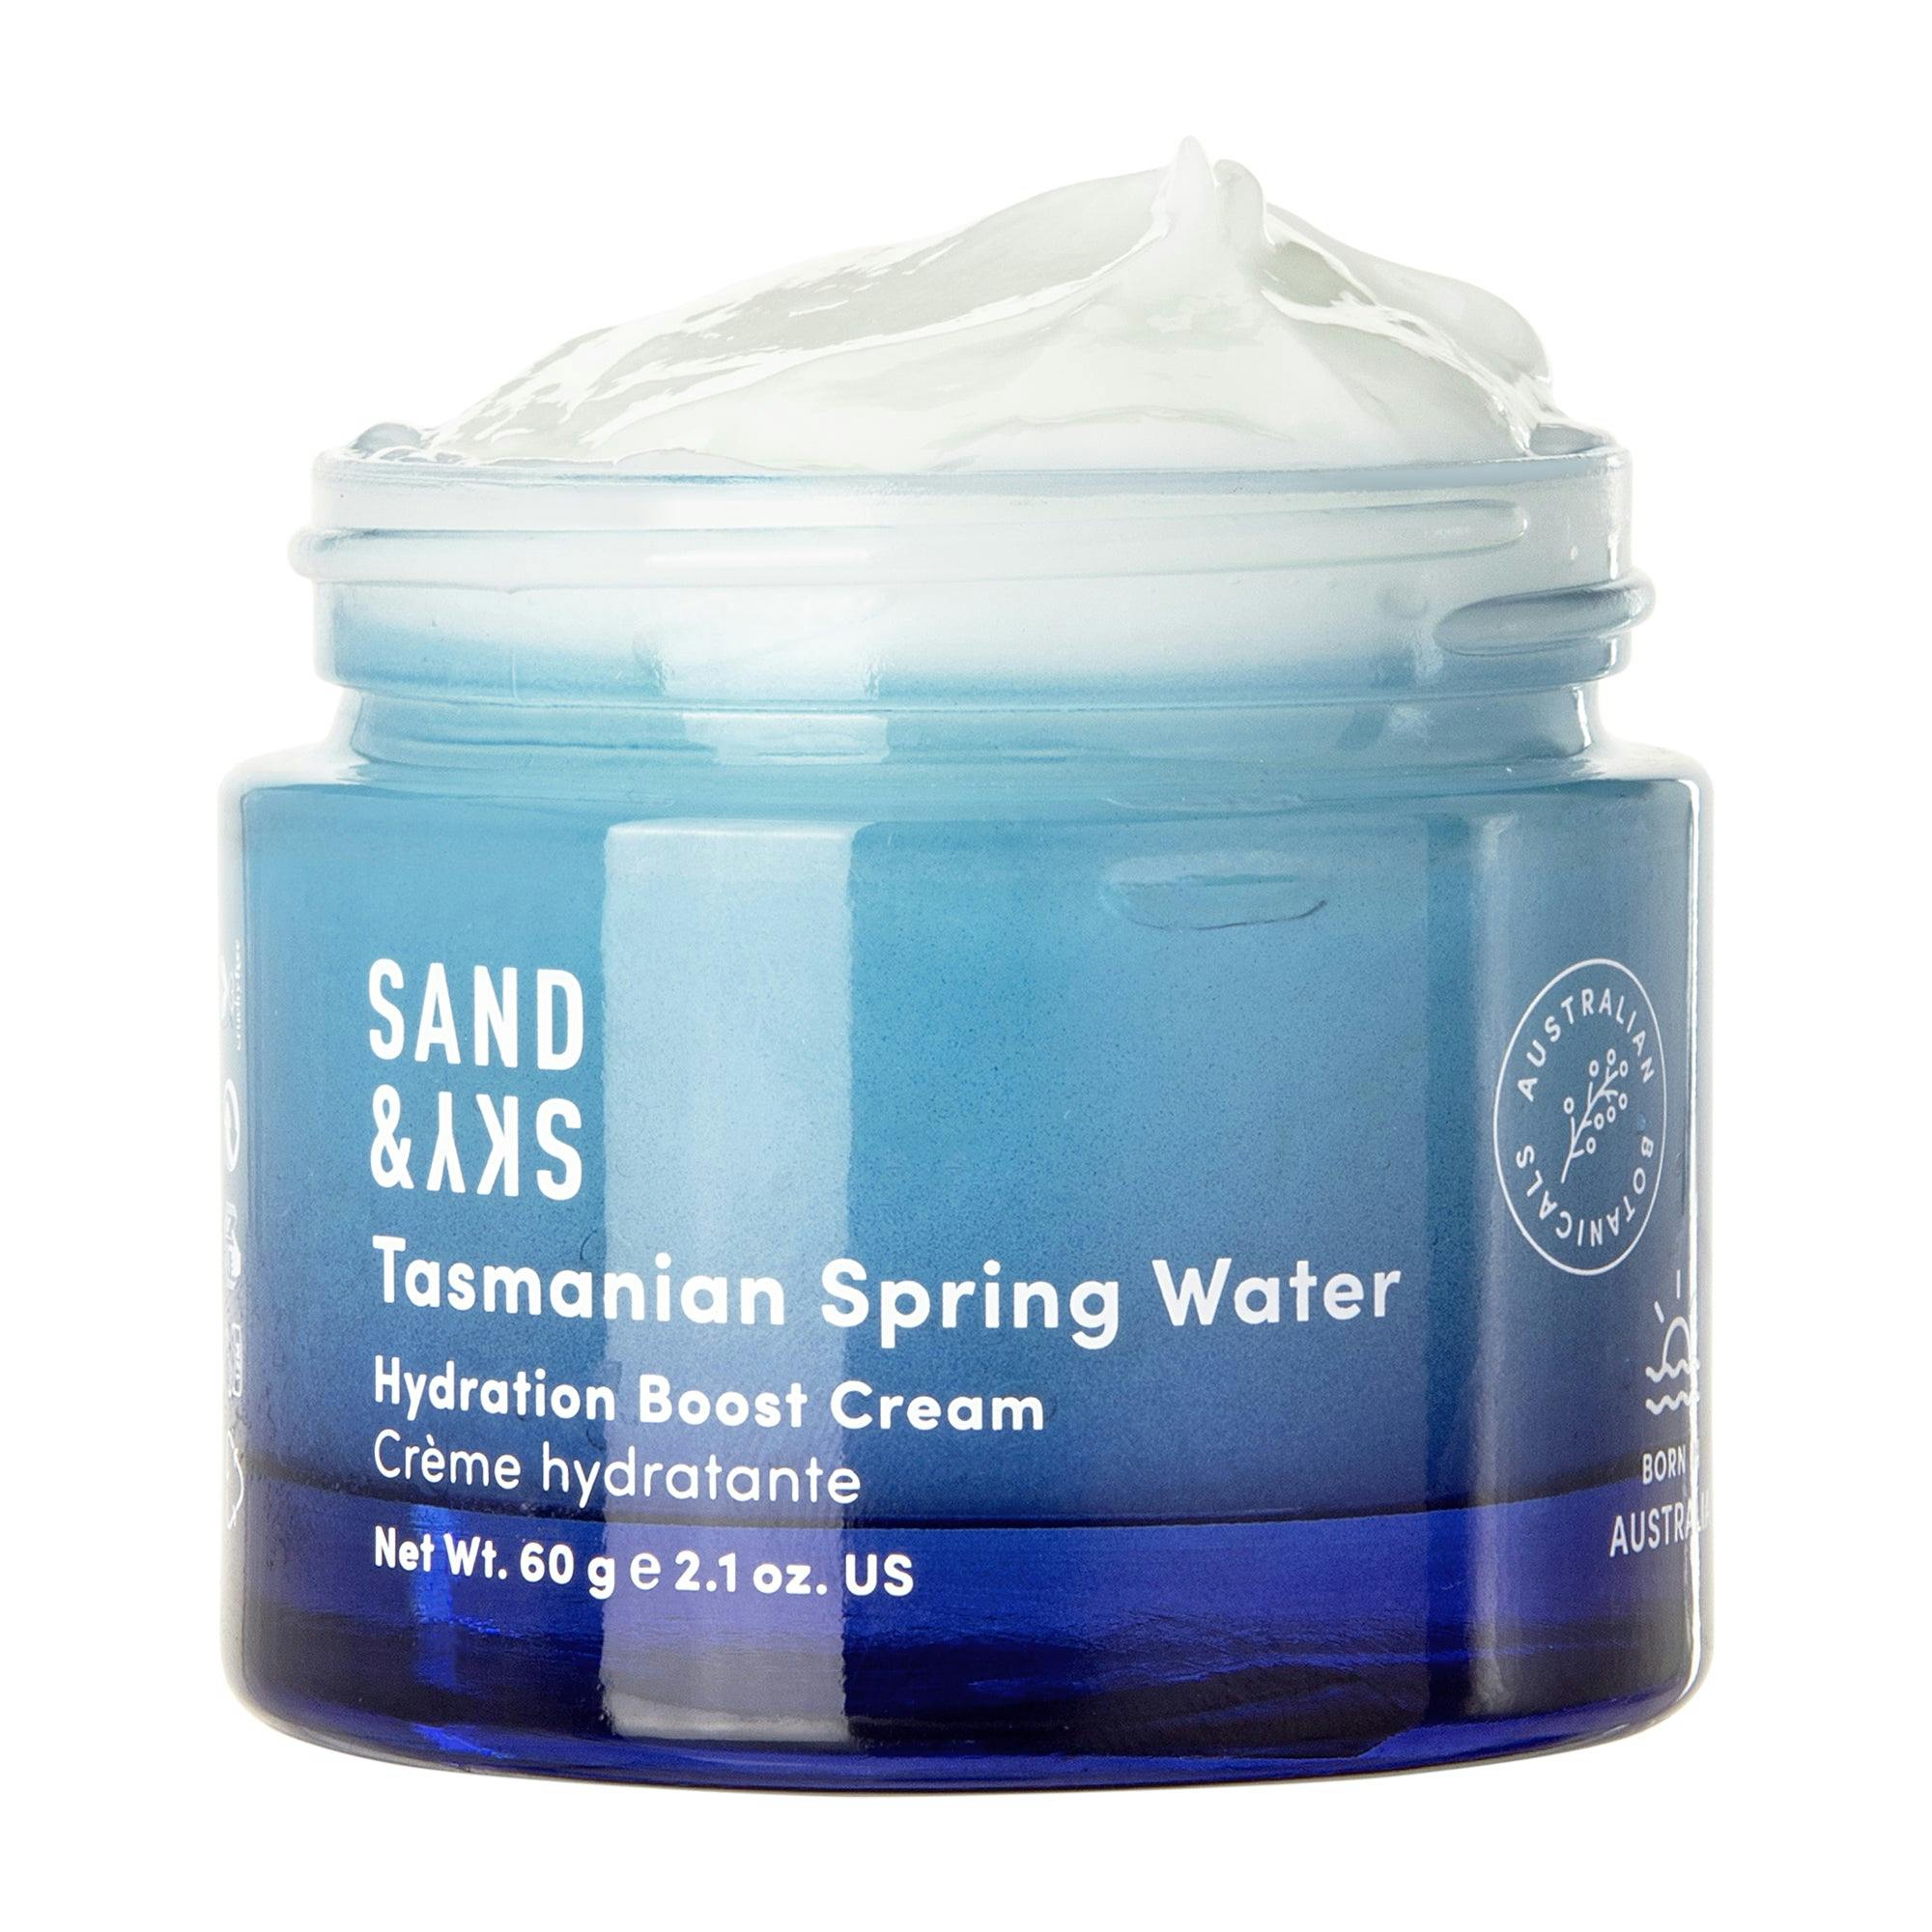 Sand & Sky Tasmanian Spring Water Hydration Boost Cream 60g